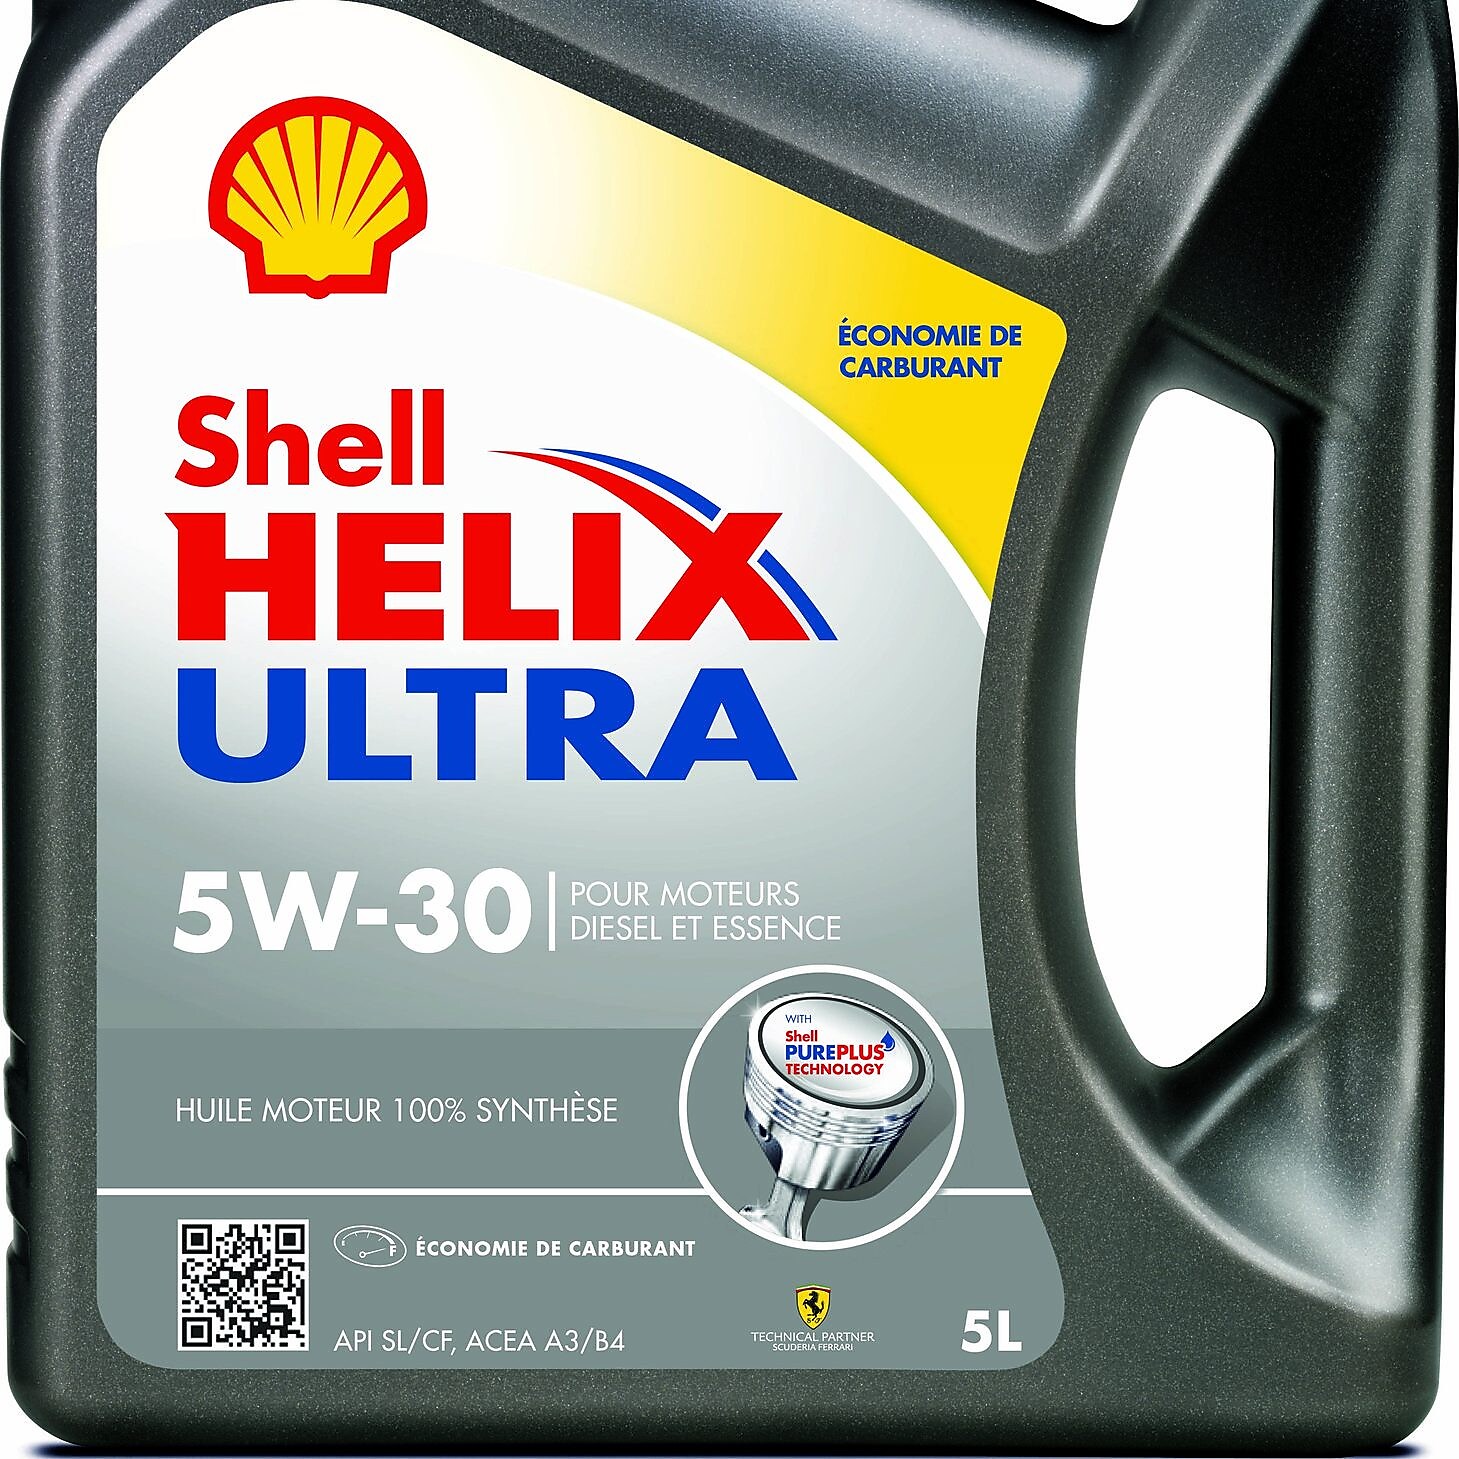 Shell シェル HELIX ULTRA EURO 5W-40 SP 1L 合成油